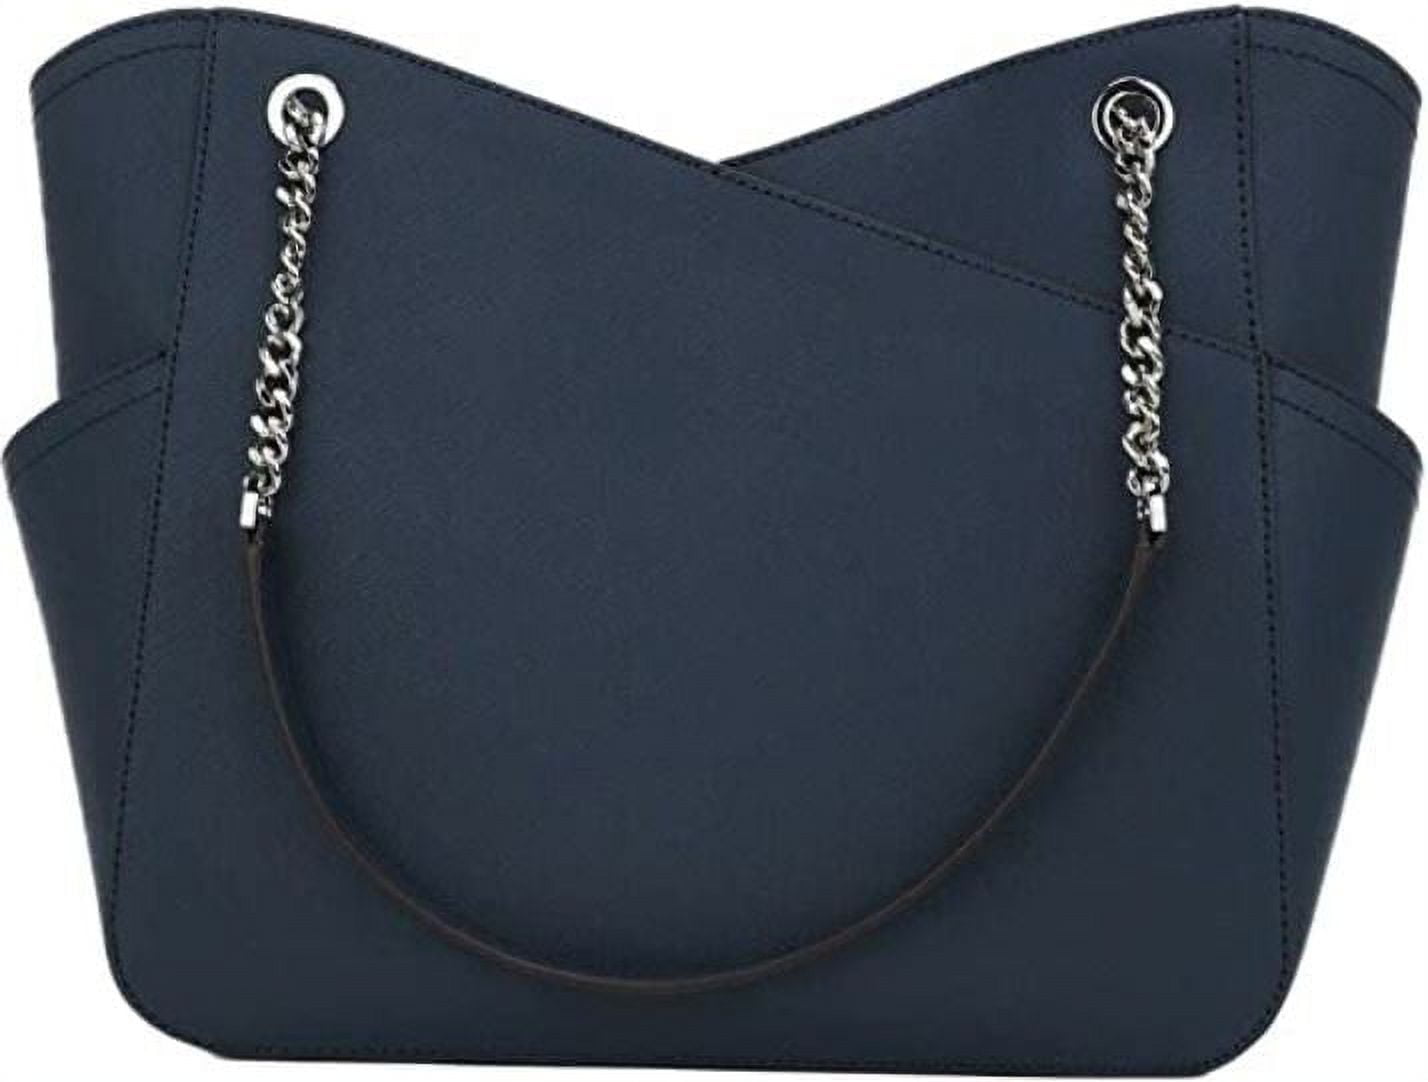 Genuine MICHAEL KORS Navy blue Saffiano Leather Tote Bag Handbag- Great